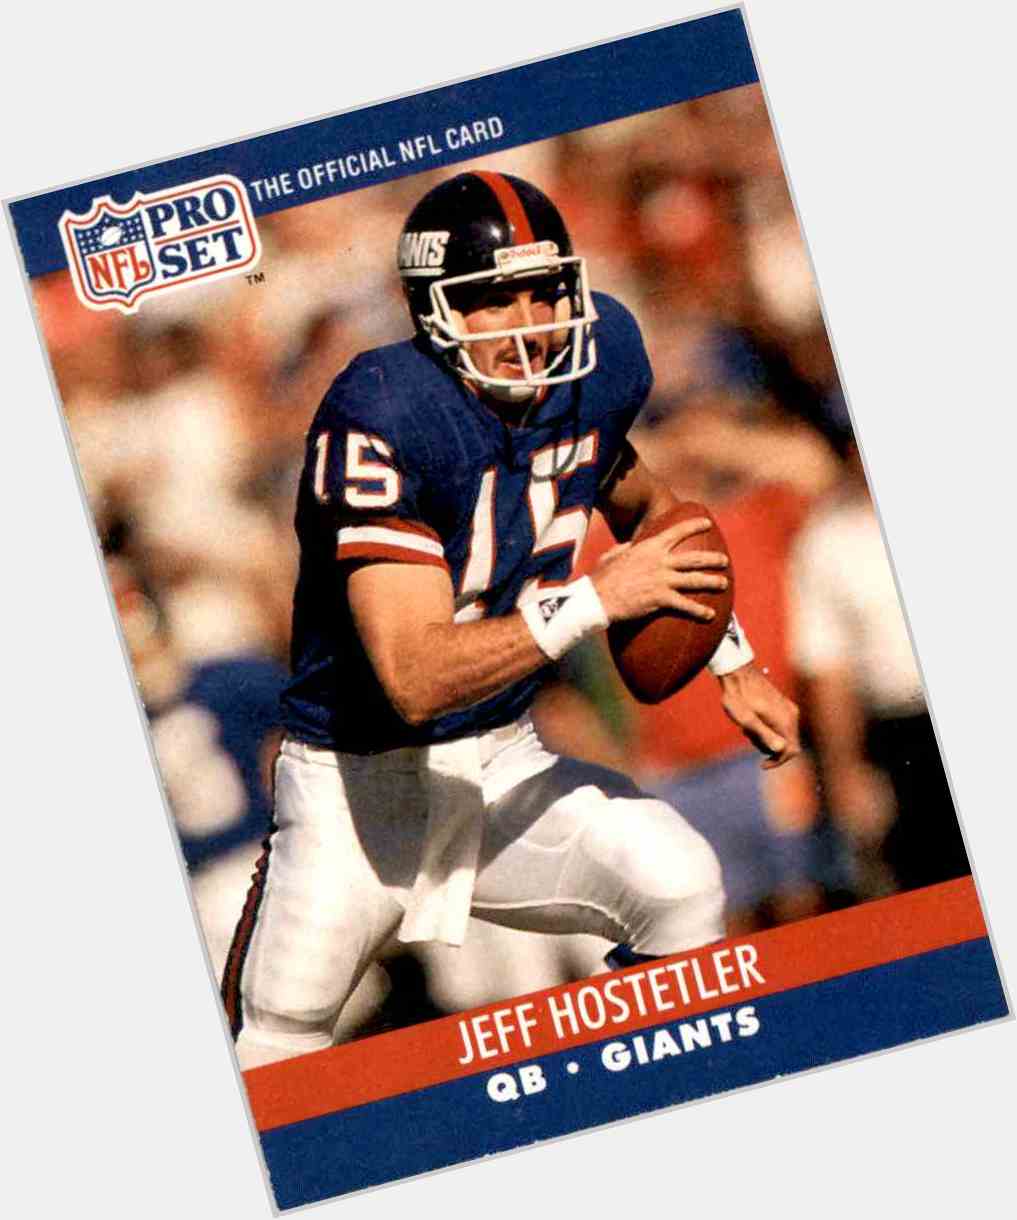 Happy Birthday Jeff Hostetler!  

Throw down an athlete that rocked 